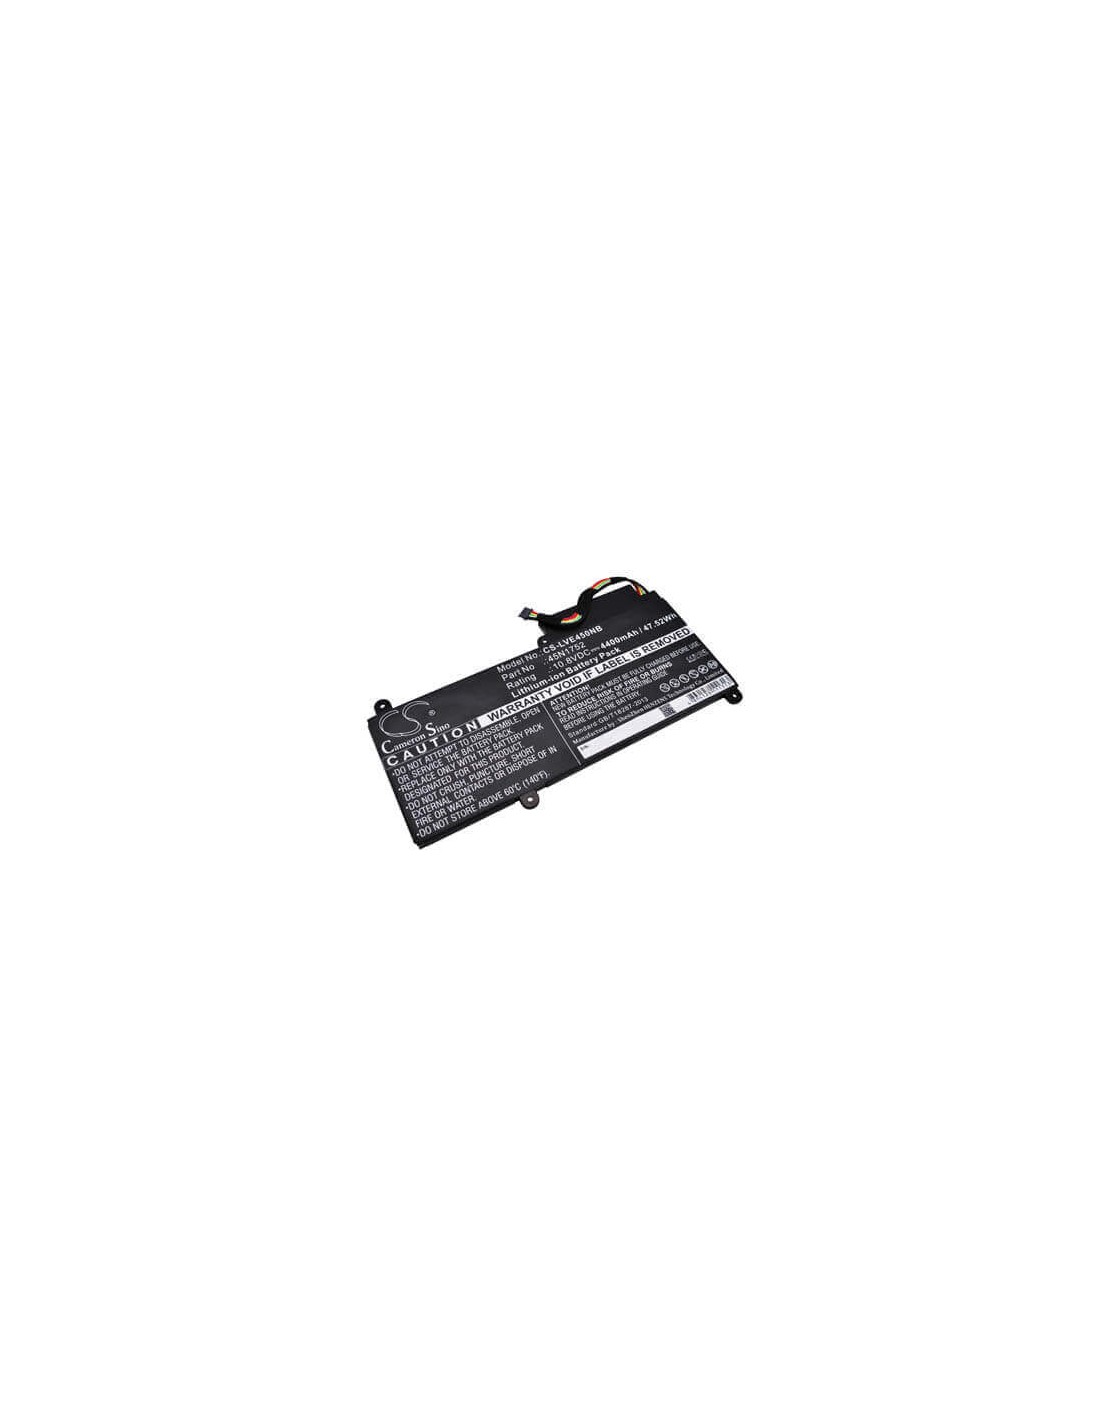 Black Battery for Lenovo Thinkpad E450, Thinkpad E450 20dc003wus, Thinkpad Edge E450 I7-5500u 10.8V, 4400mAh - 47.52Wh